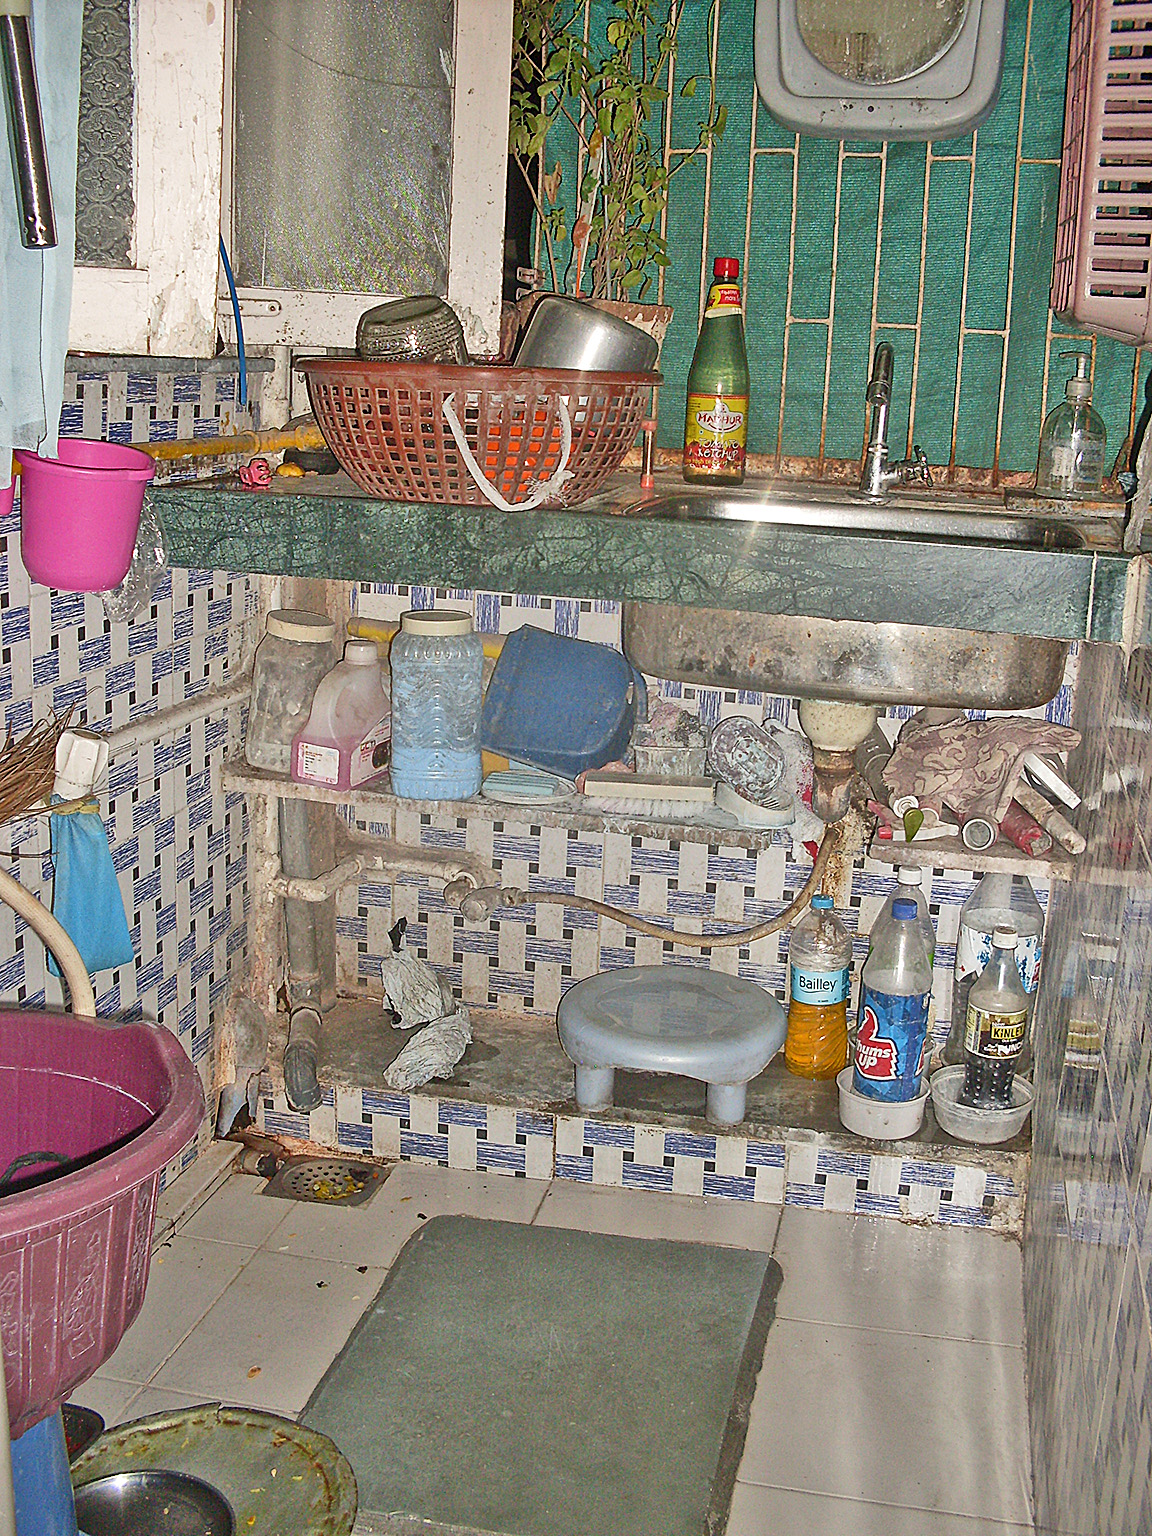 AdhyaShakti Apartment